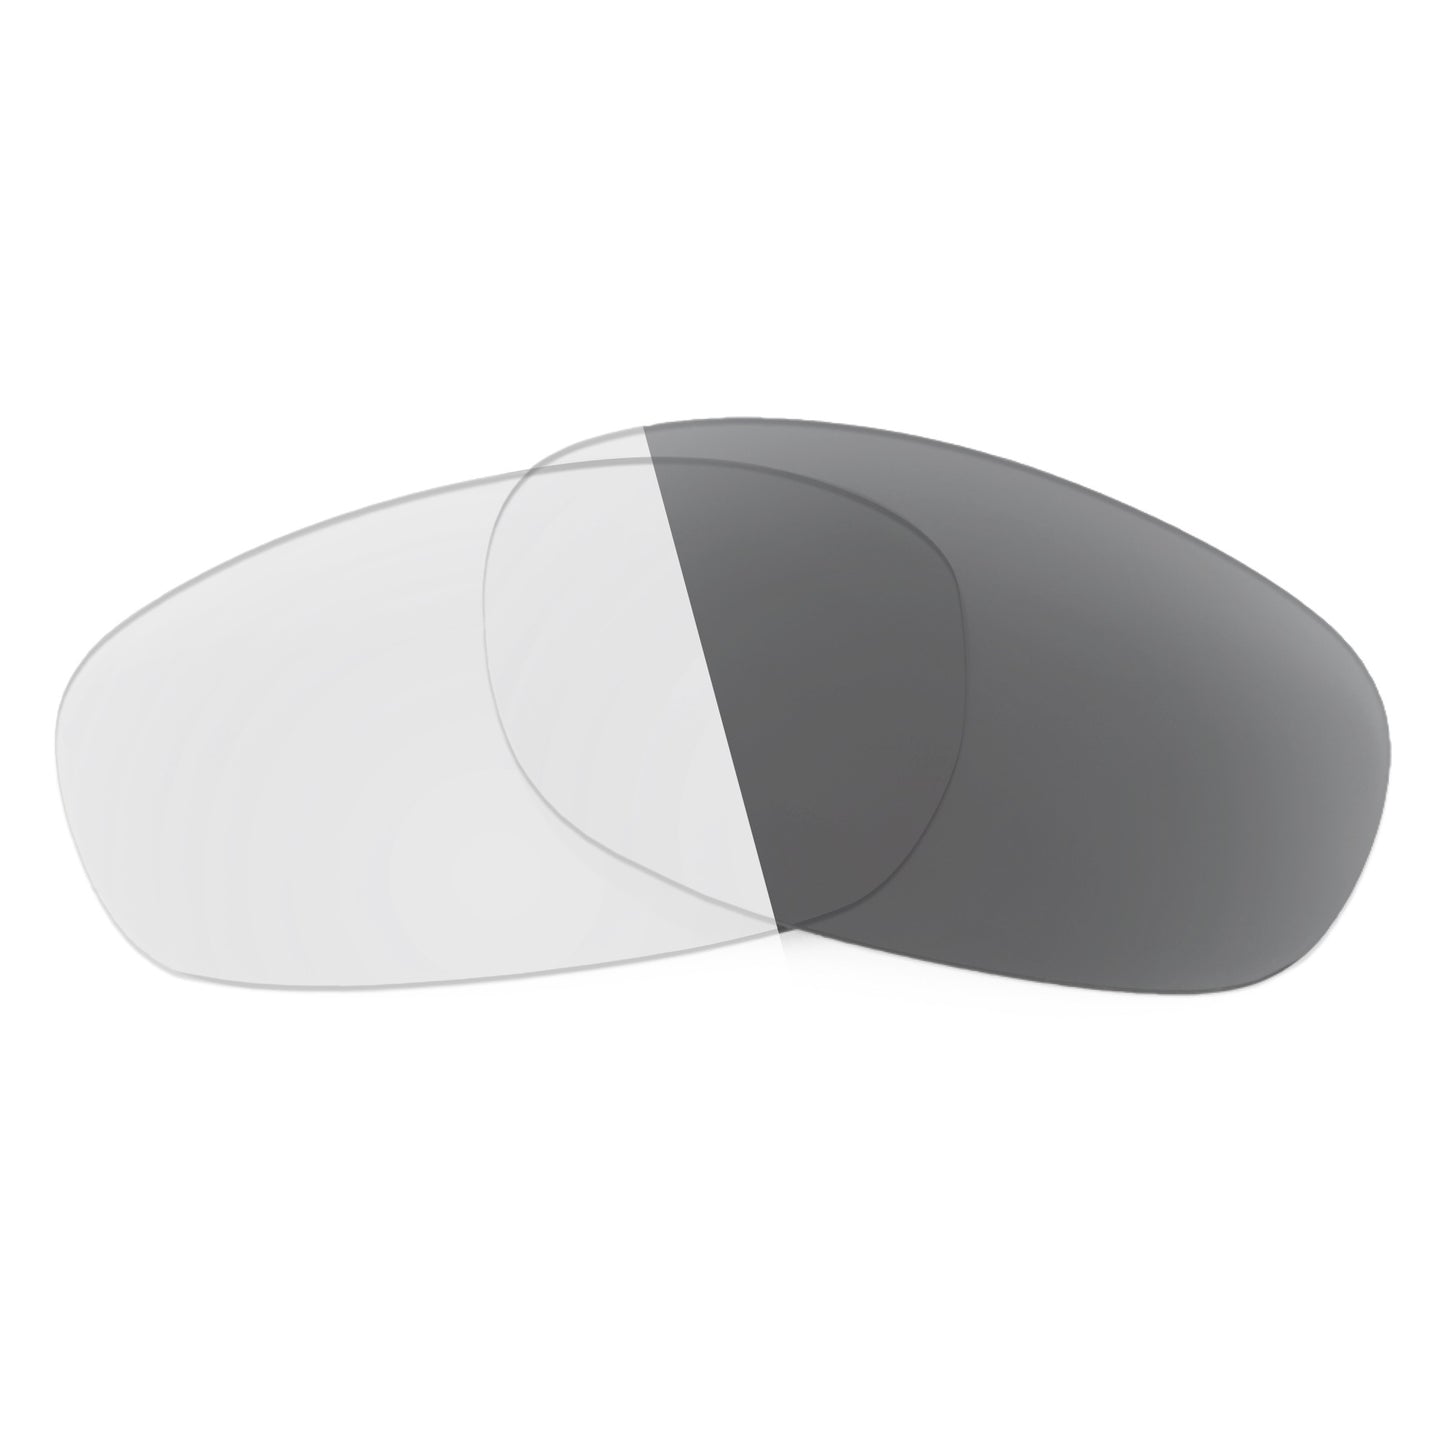 Revant replacement lenses for Spy Optic Genre Non-Polarized Adapt Gray Photochromic